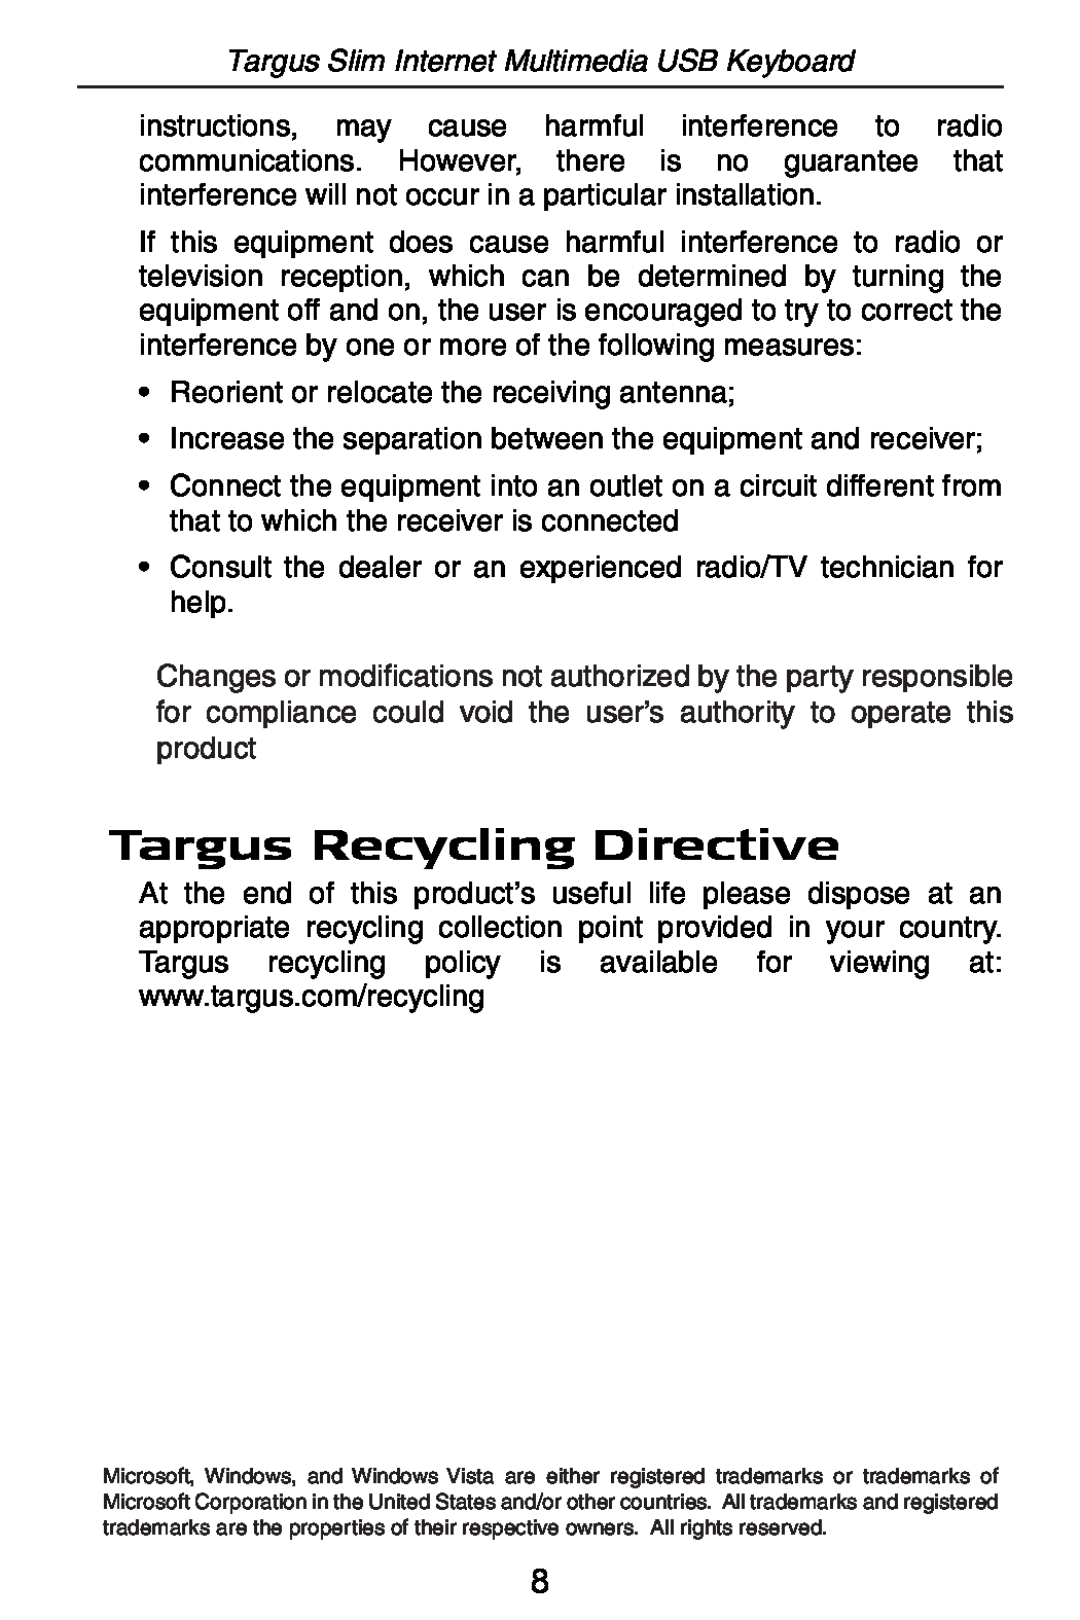 Targus slim internet multimedia USB keyboard Targus Recycling Directive, Targus Slim Internet Multimedia USB Keyboard 